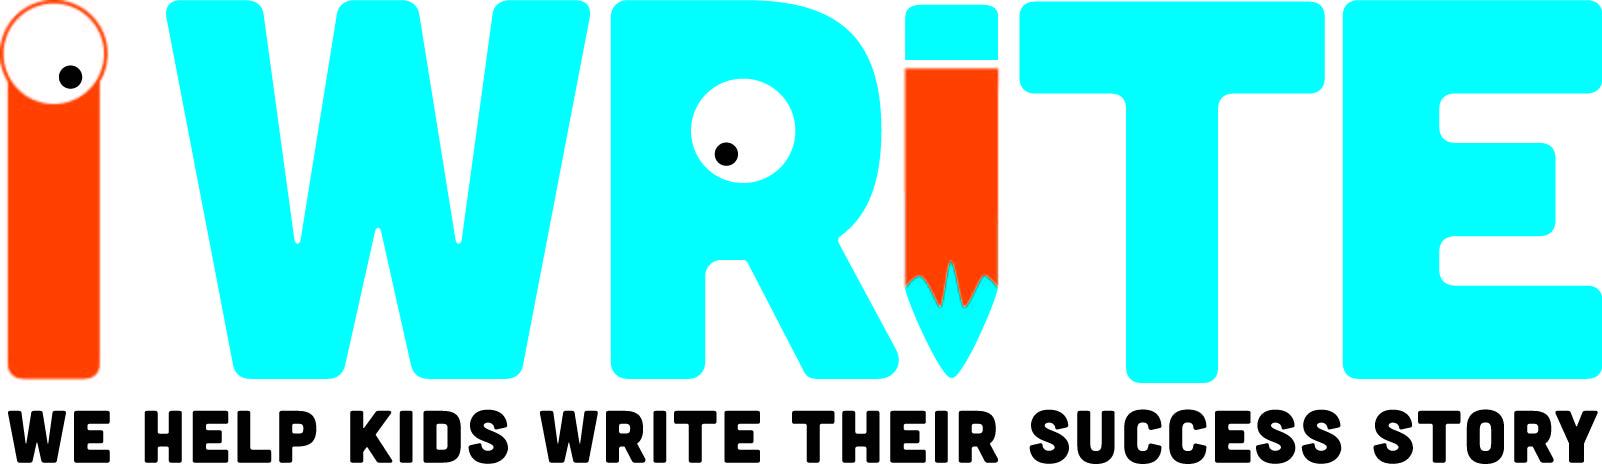 iWRITE Logo